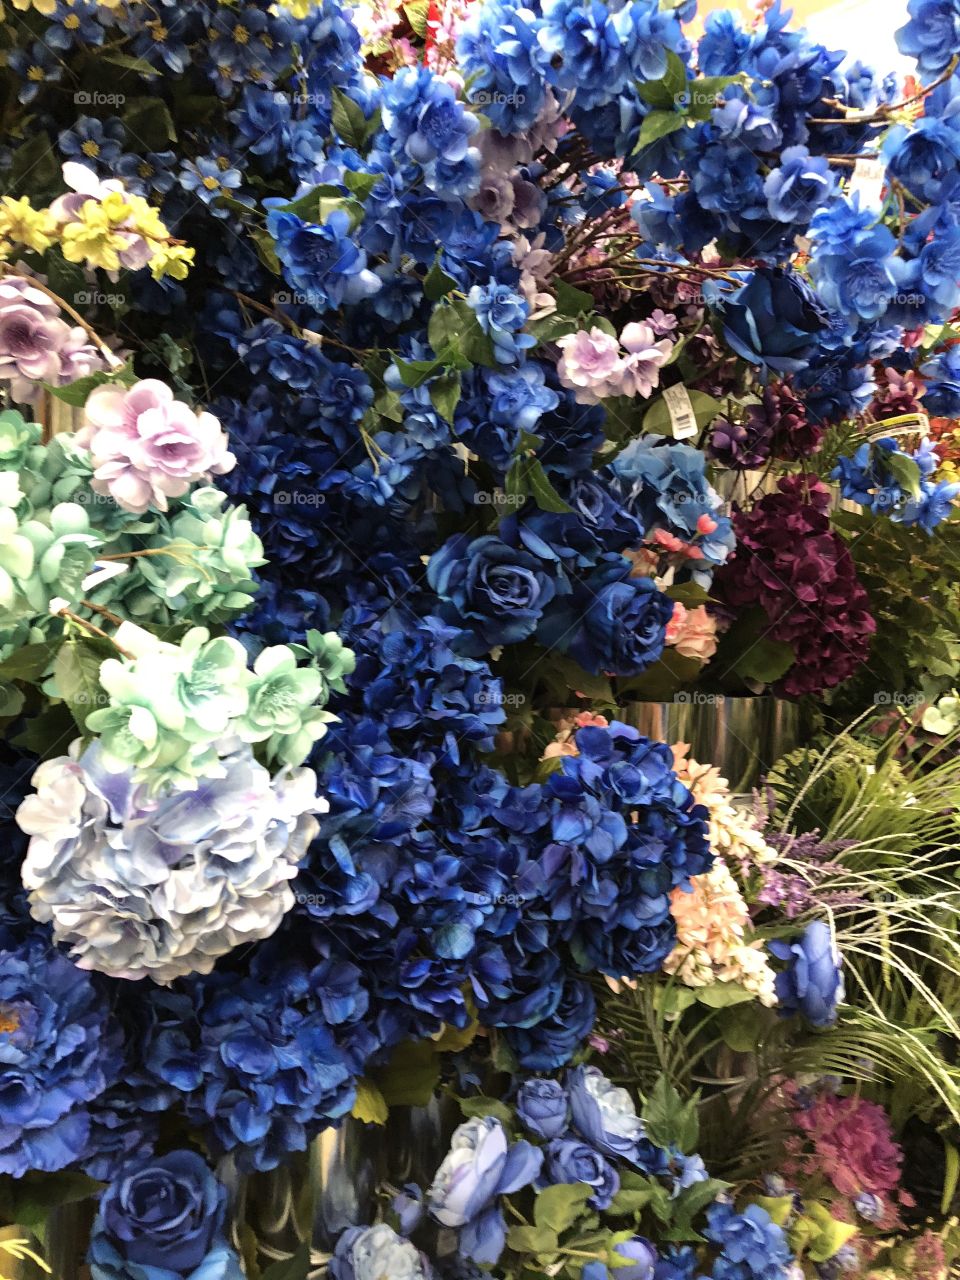 Blue Hues of Flowers